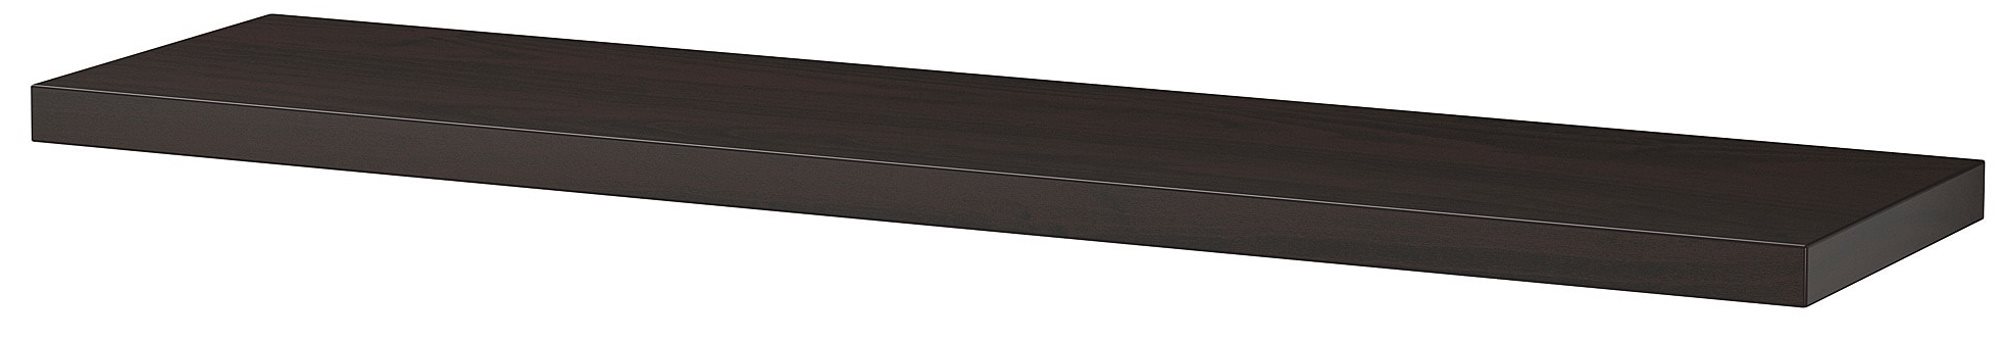 Полка Ikea Bergshult 80x20 Черно-коричневый